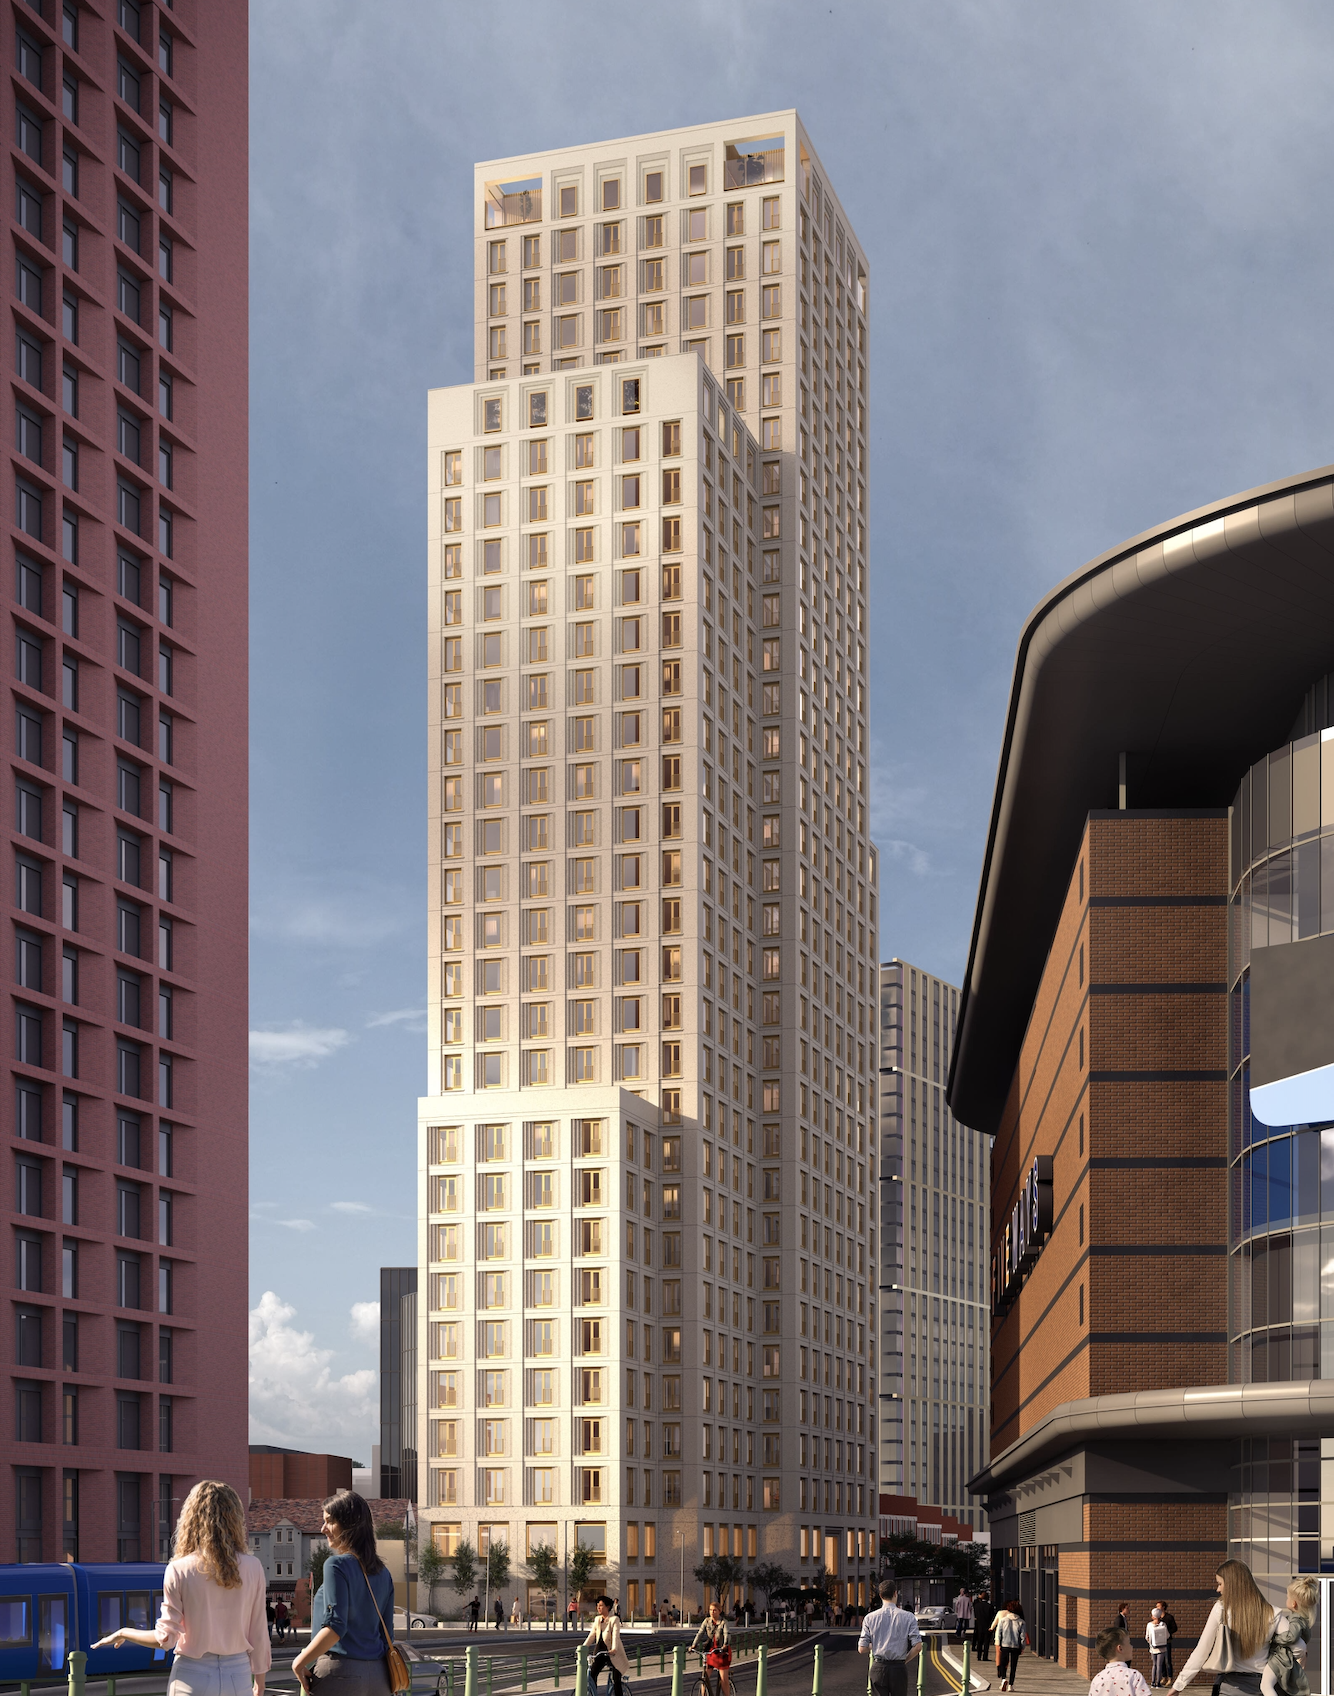 Birmingham Broad Street 33-storey tower approved